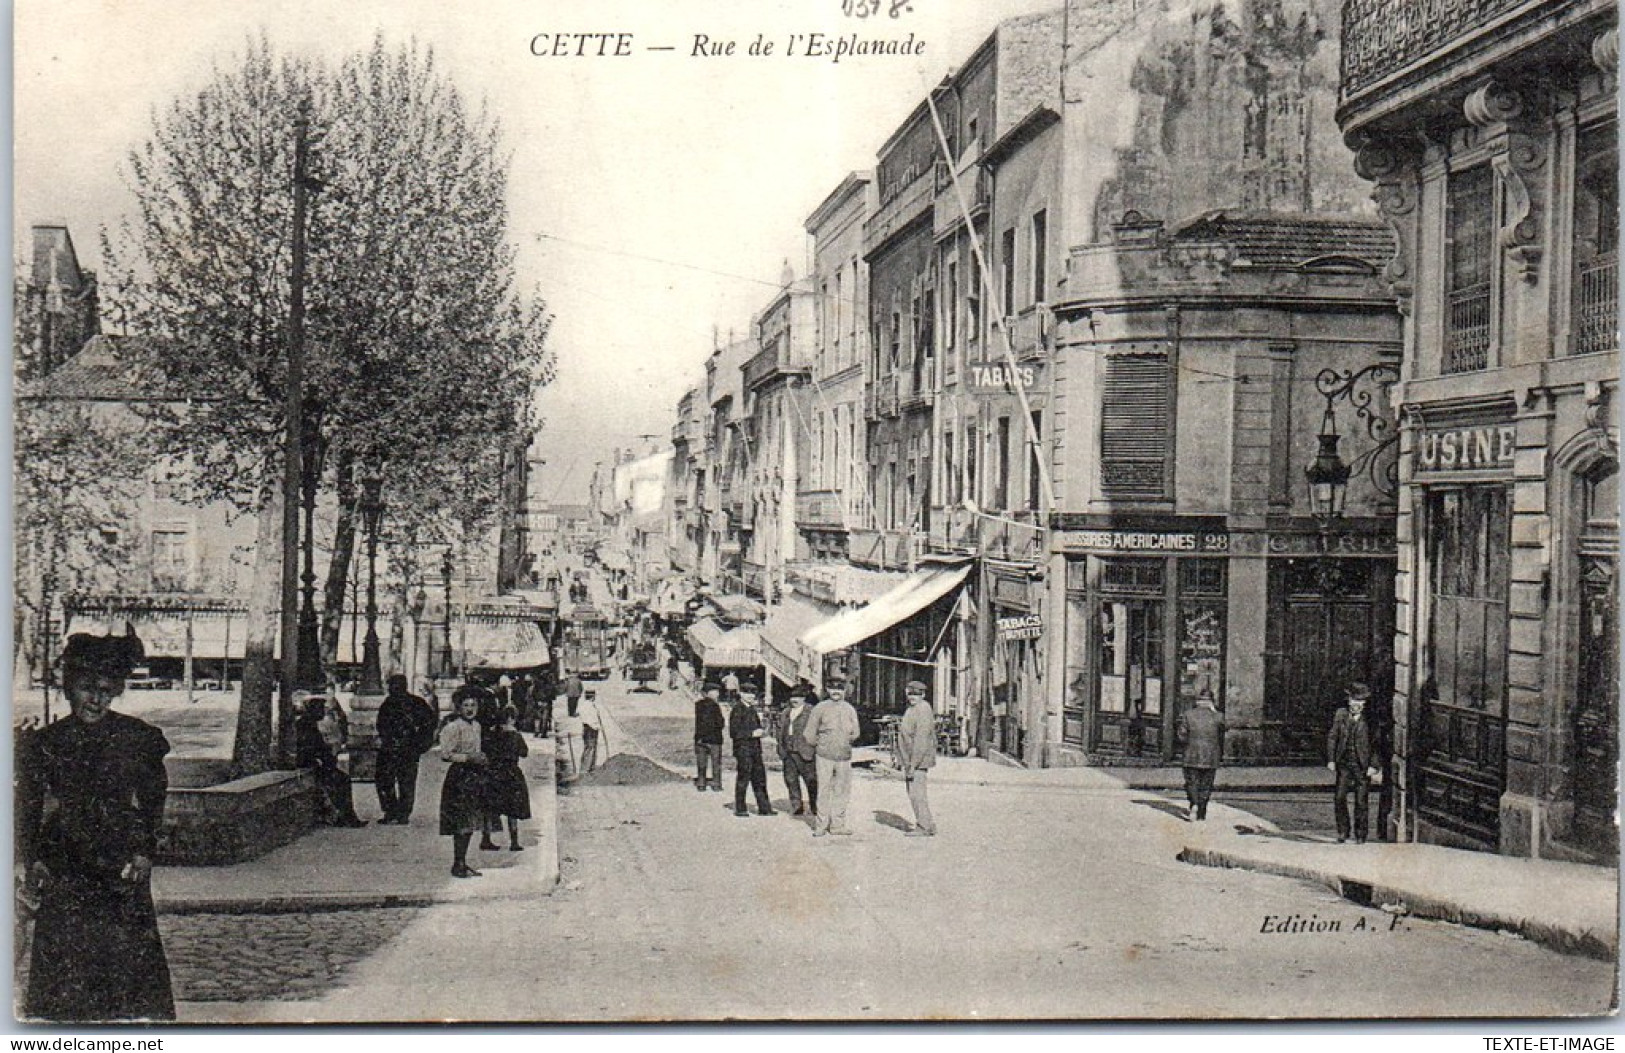 34 CETTE - Un Coin De La Rue De L'esplanade. - Sete (Cette)